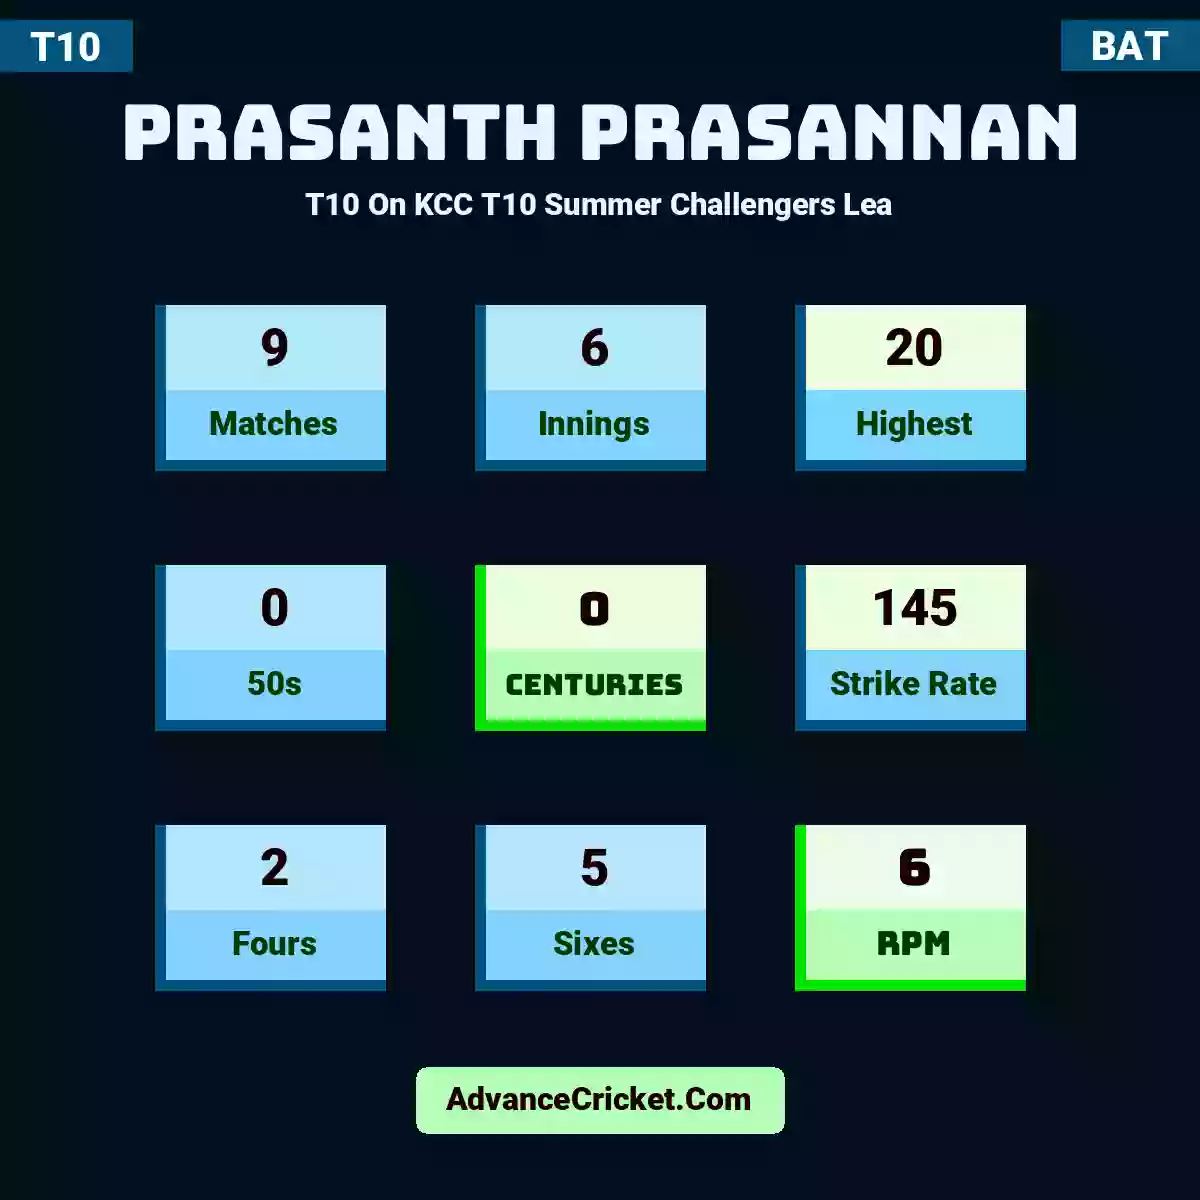 Prasanth Prasannan T10  On KCC T10 Summer Challengers Lea, Prasanth Prasannan played 9 matches, scored 20 runs as highest, 0 half-centuries, and 0 centuries, with a strike rate of 145. P.Prasannan hit 2 fours and 5 sixes, with an RPM of 6.